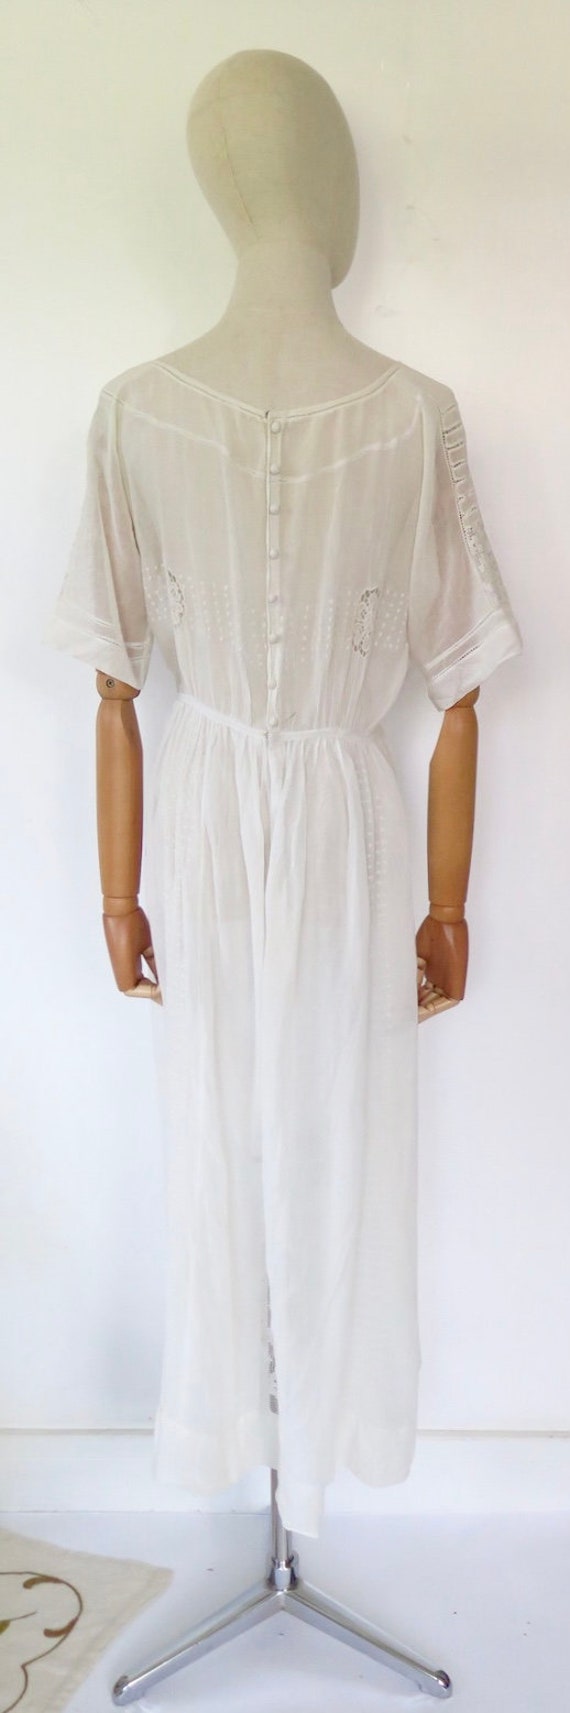 Antique 1910s Edwardian French White Cotton Lace … - image 4